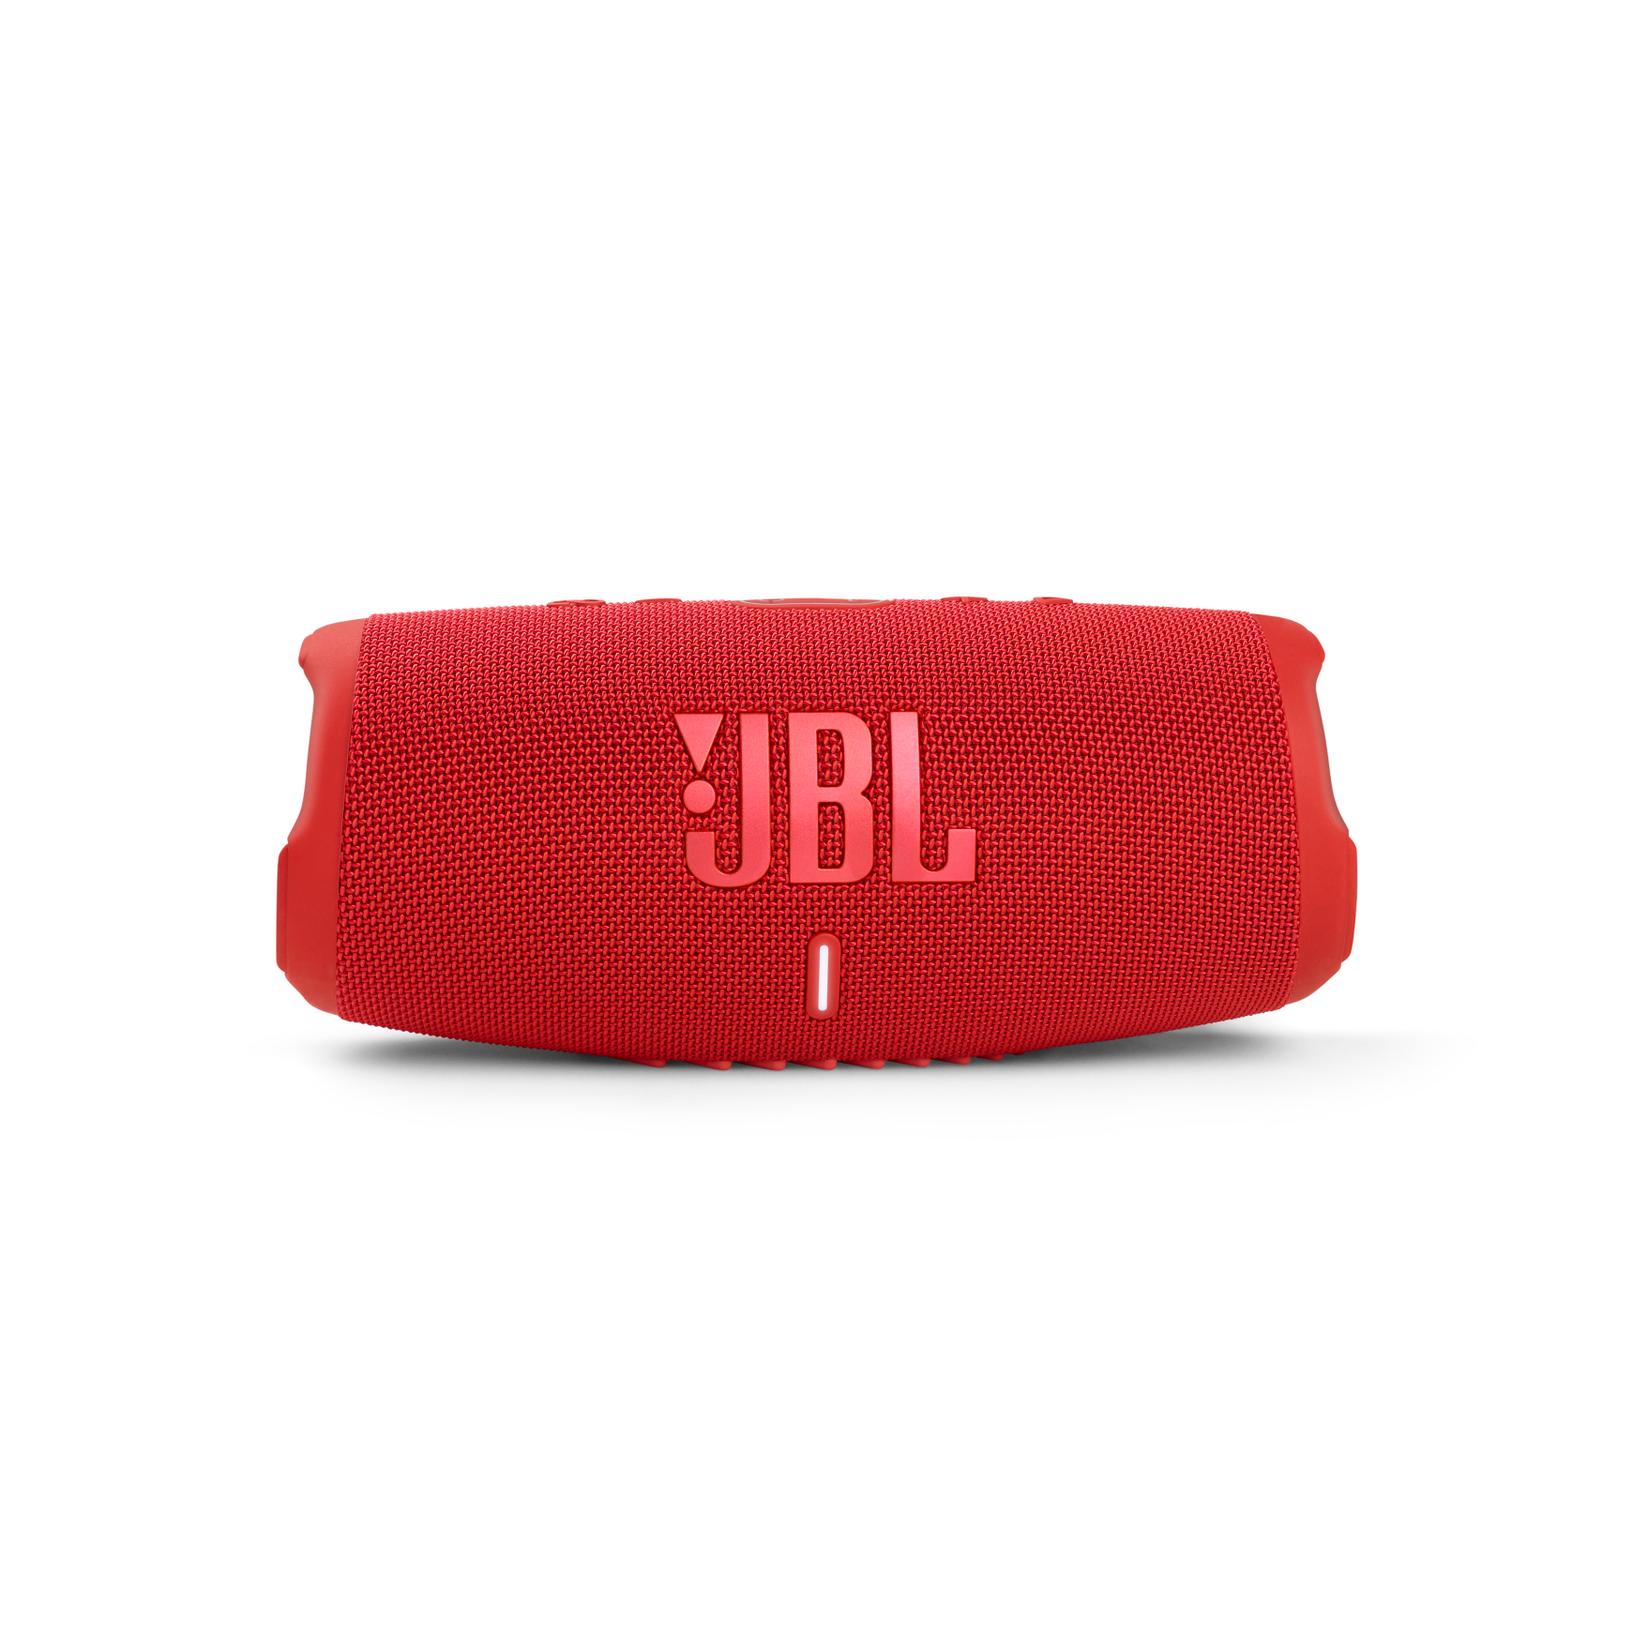 Selected image for JBL Bežični zvučnik CHARGE 5 crveni